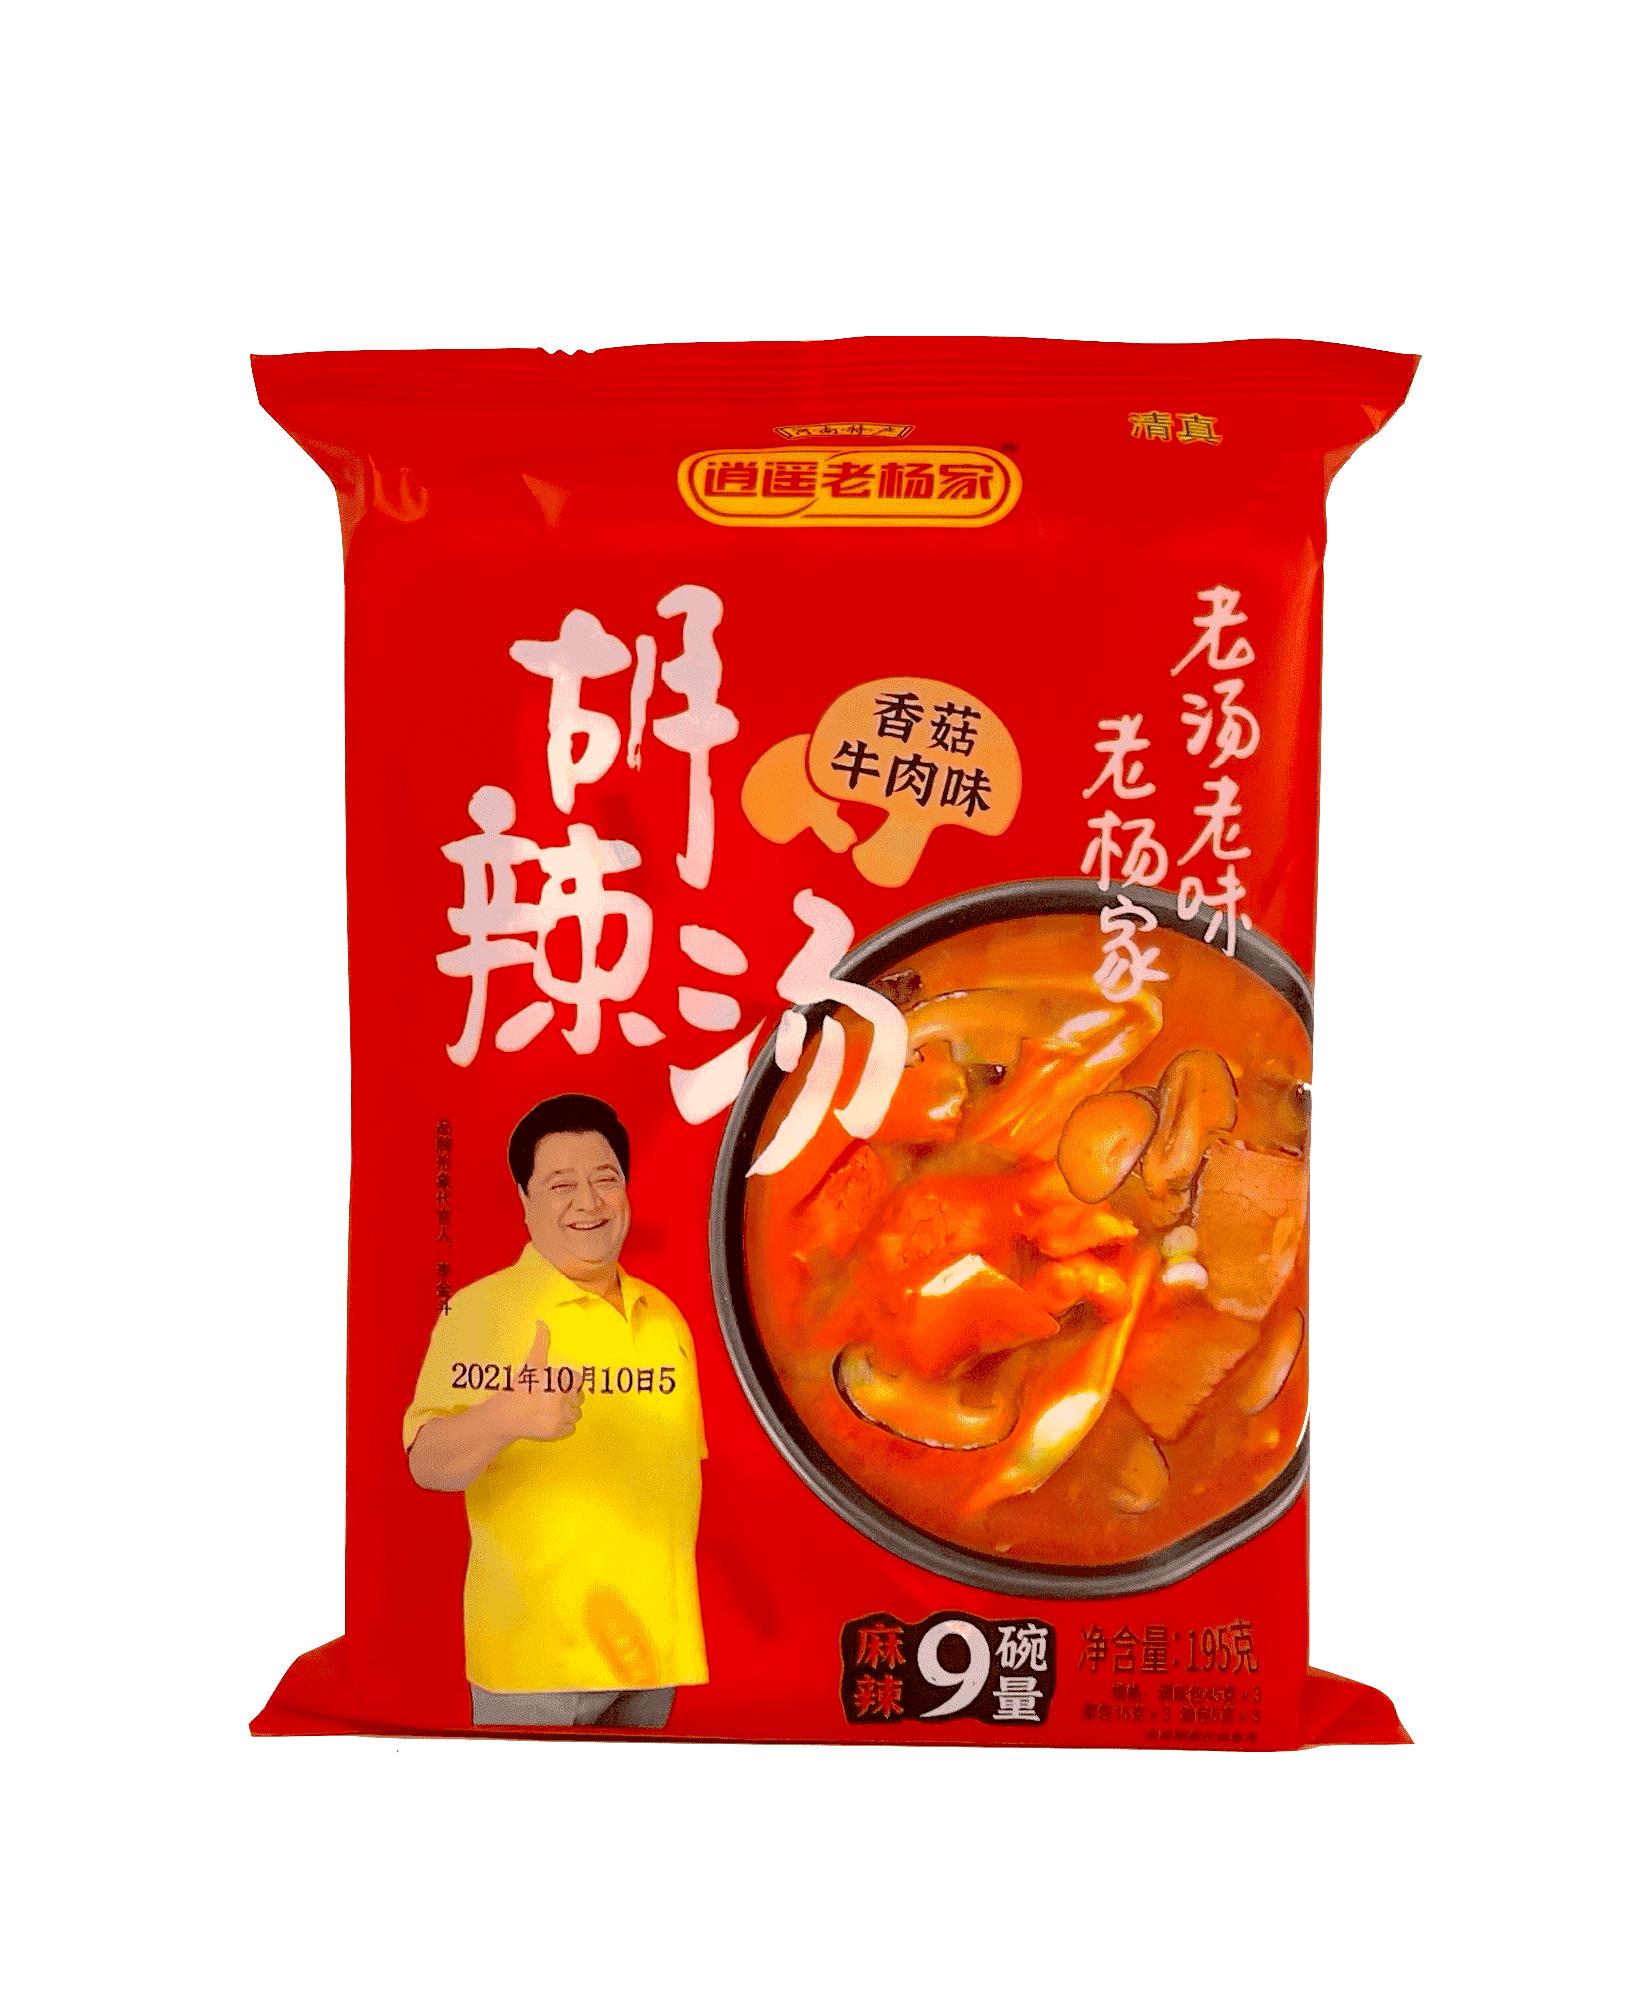 Snabbsoppa Hot/Spicy Smak 195g Hu La Tang Lao Yang Jia Kina